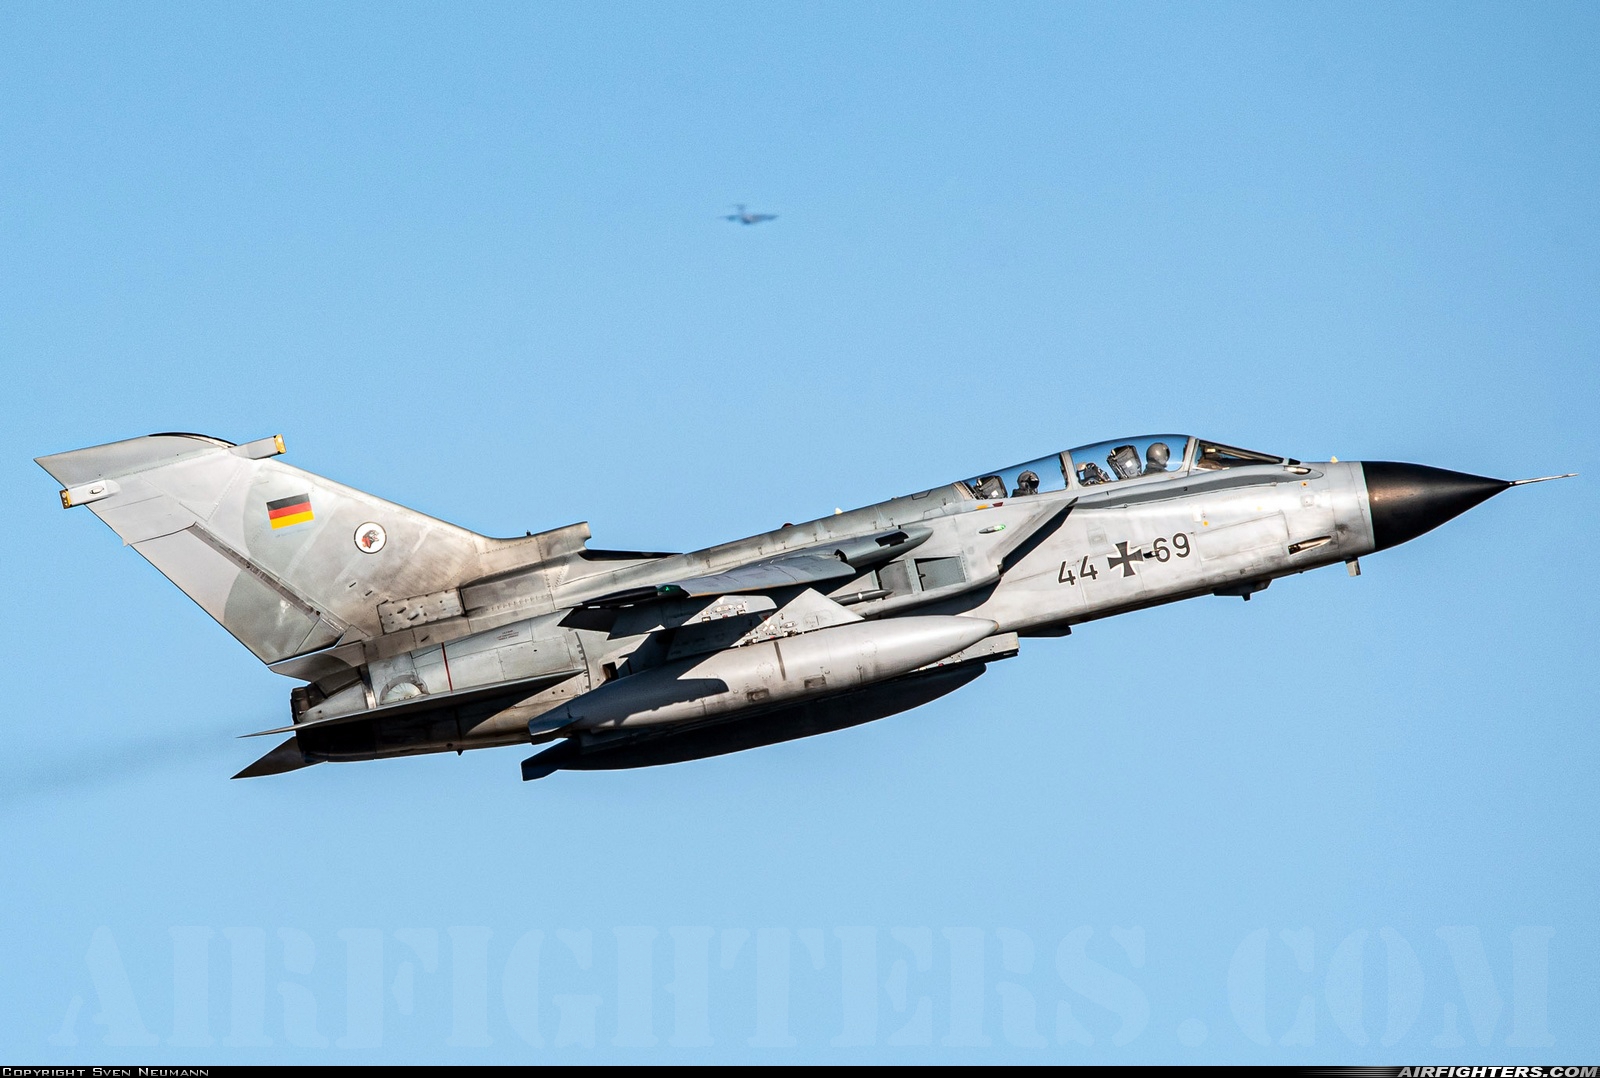 Germany - Air Force Panavia Tornado IDS 44+69 at Wunstorf (ETNW), Germany